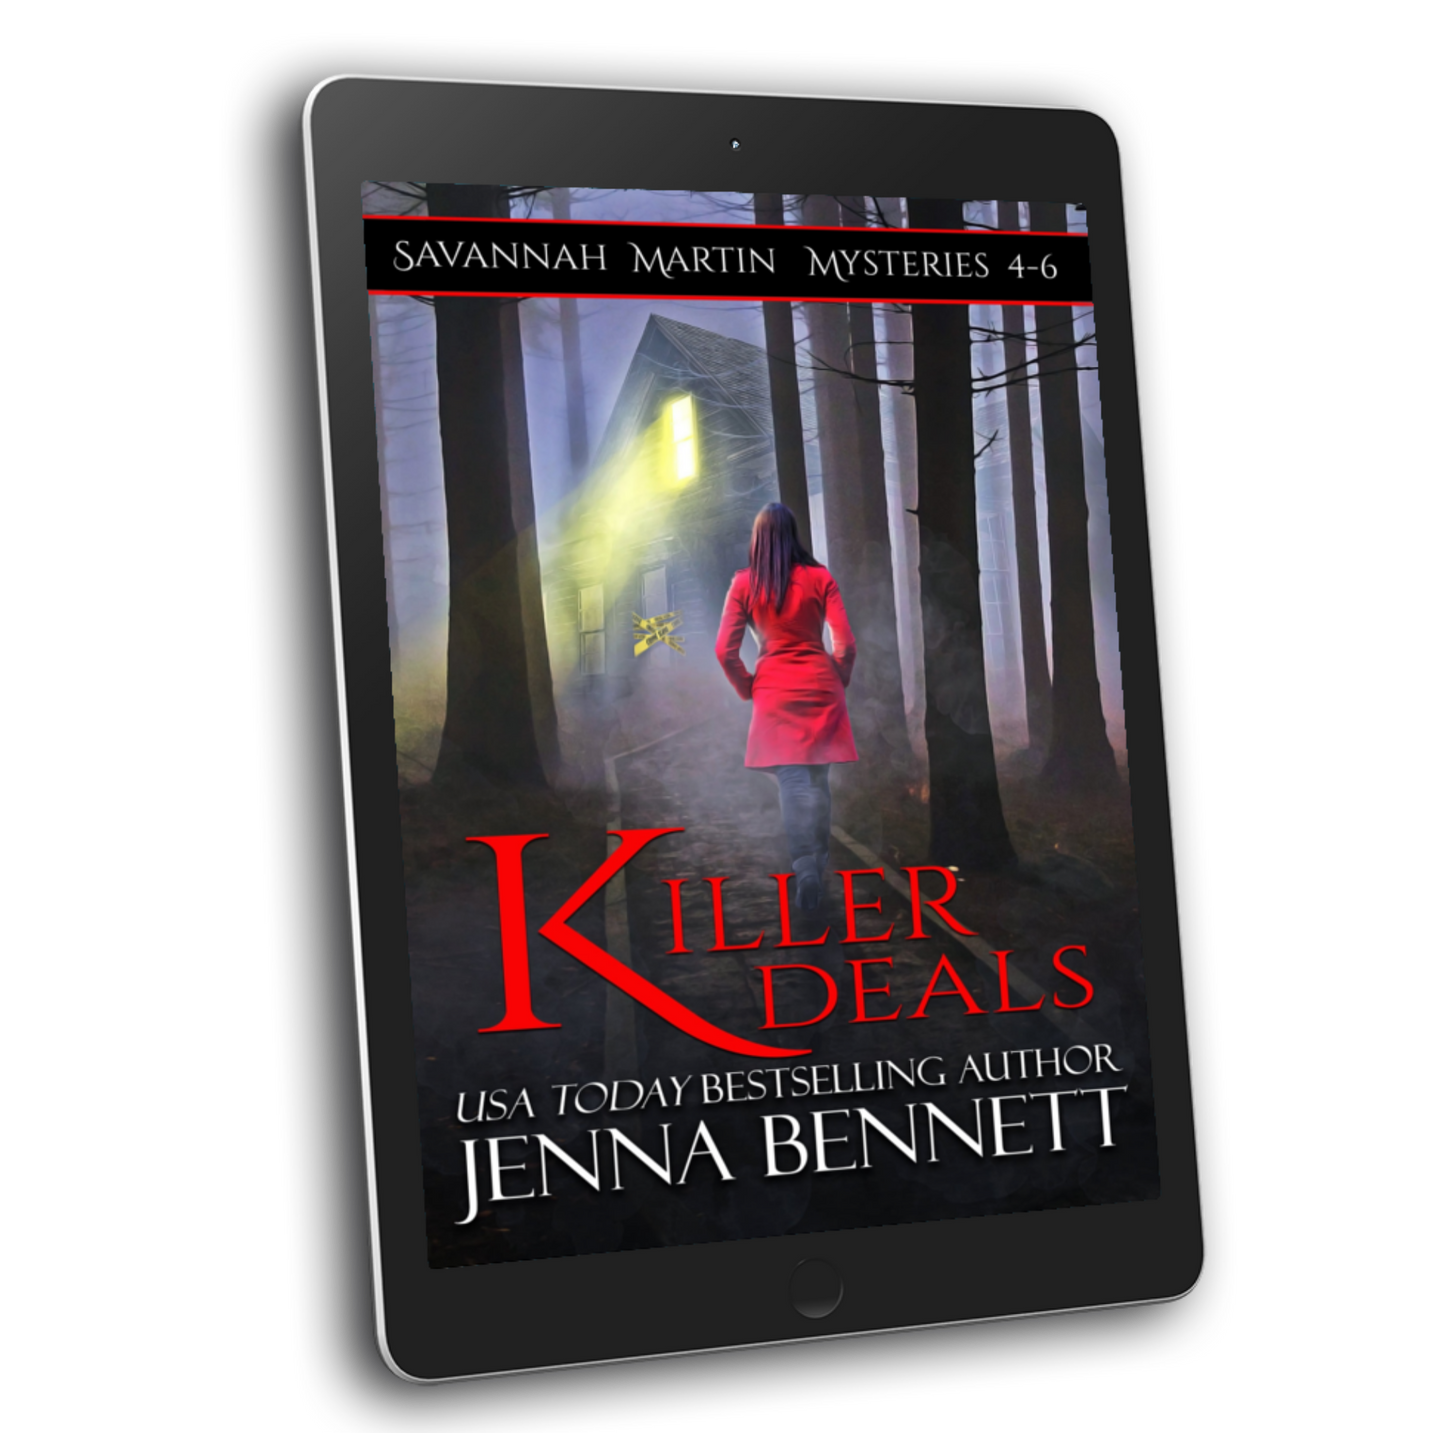 Killer Deals - Savannah Martin Mysteries 4-6